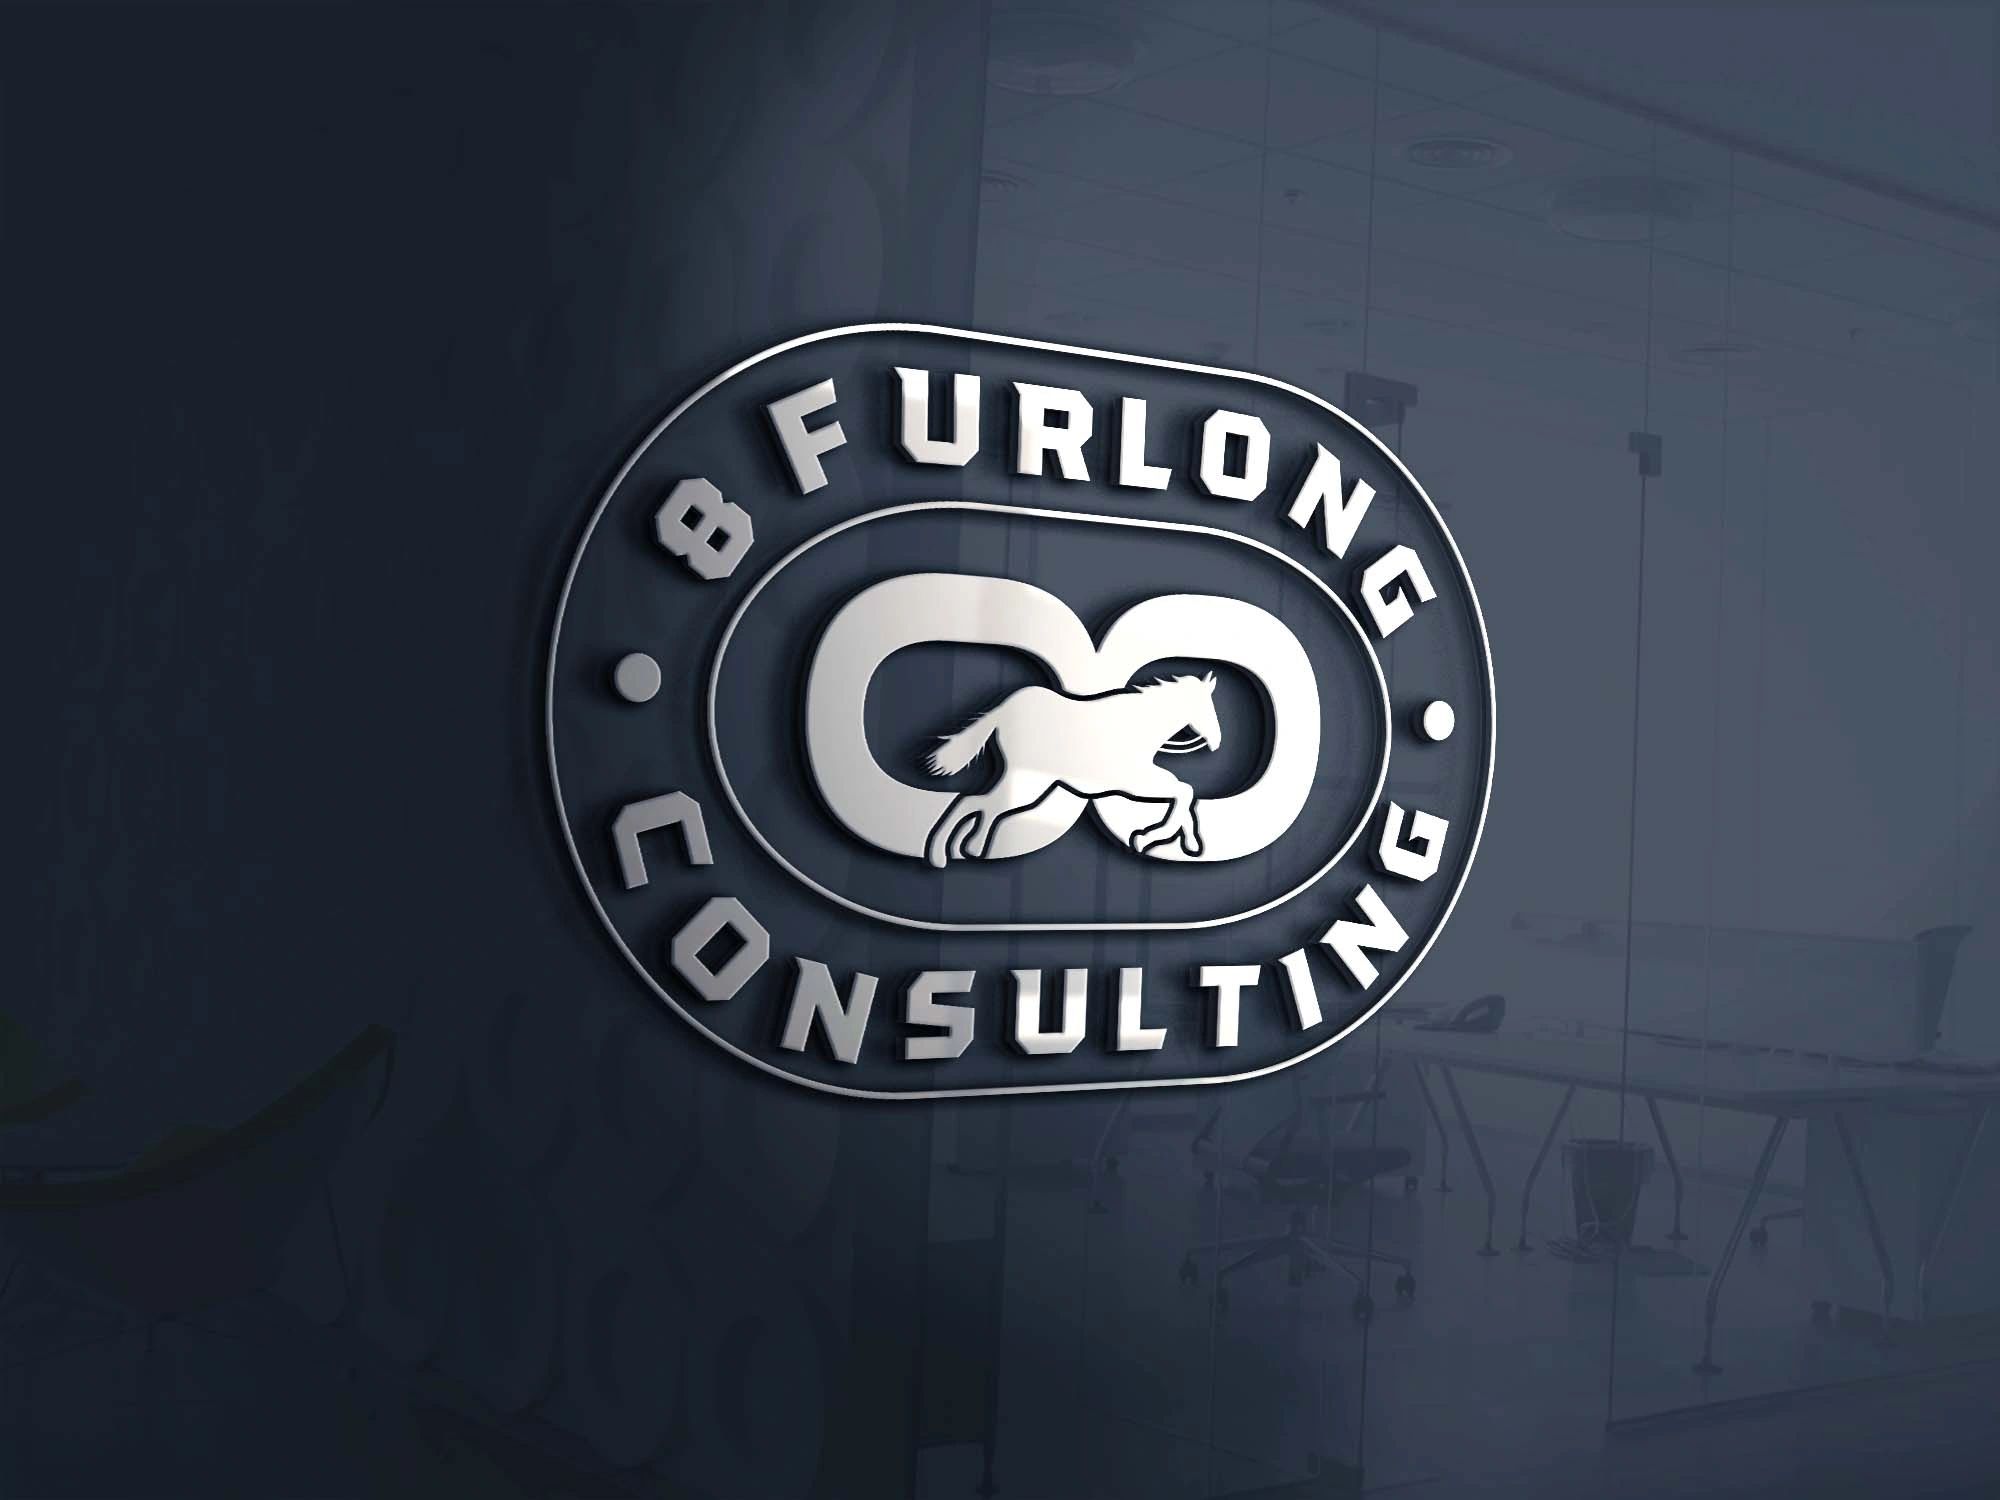 8 Furlong Business Consulting Logo servicing Columbia, Chapin, Irmo, Lexington, West Columbia, SC